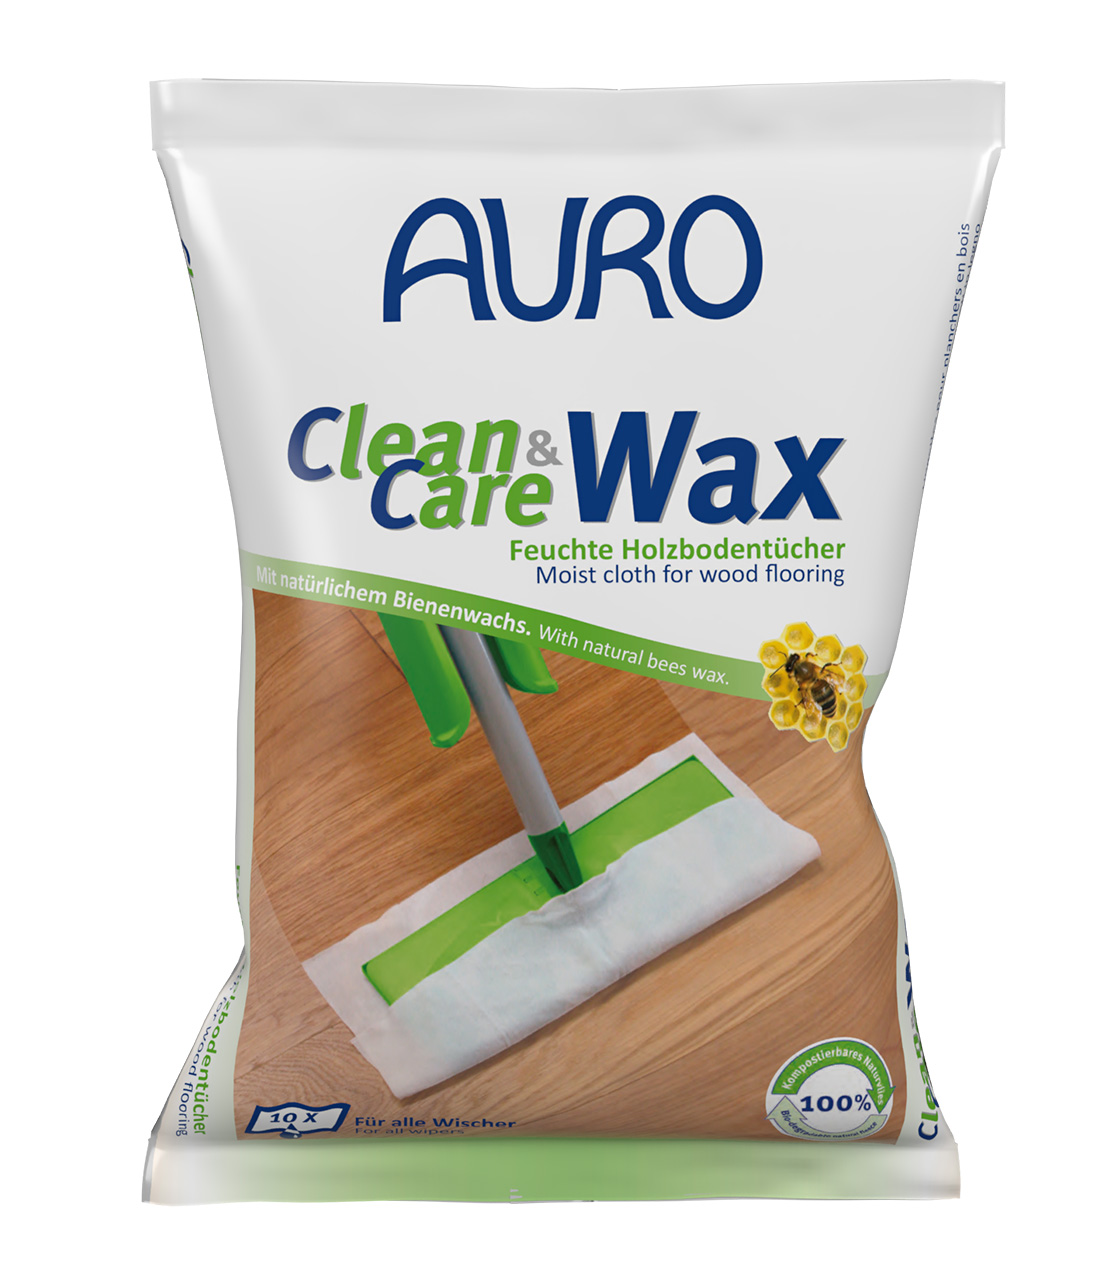 AURO Clean & Care Wax - Feuchte Holzbodentücher Nr. 680